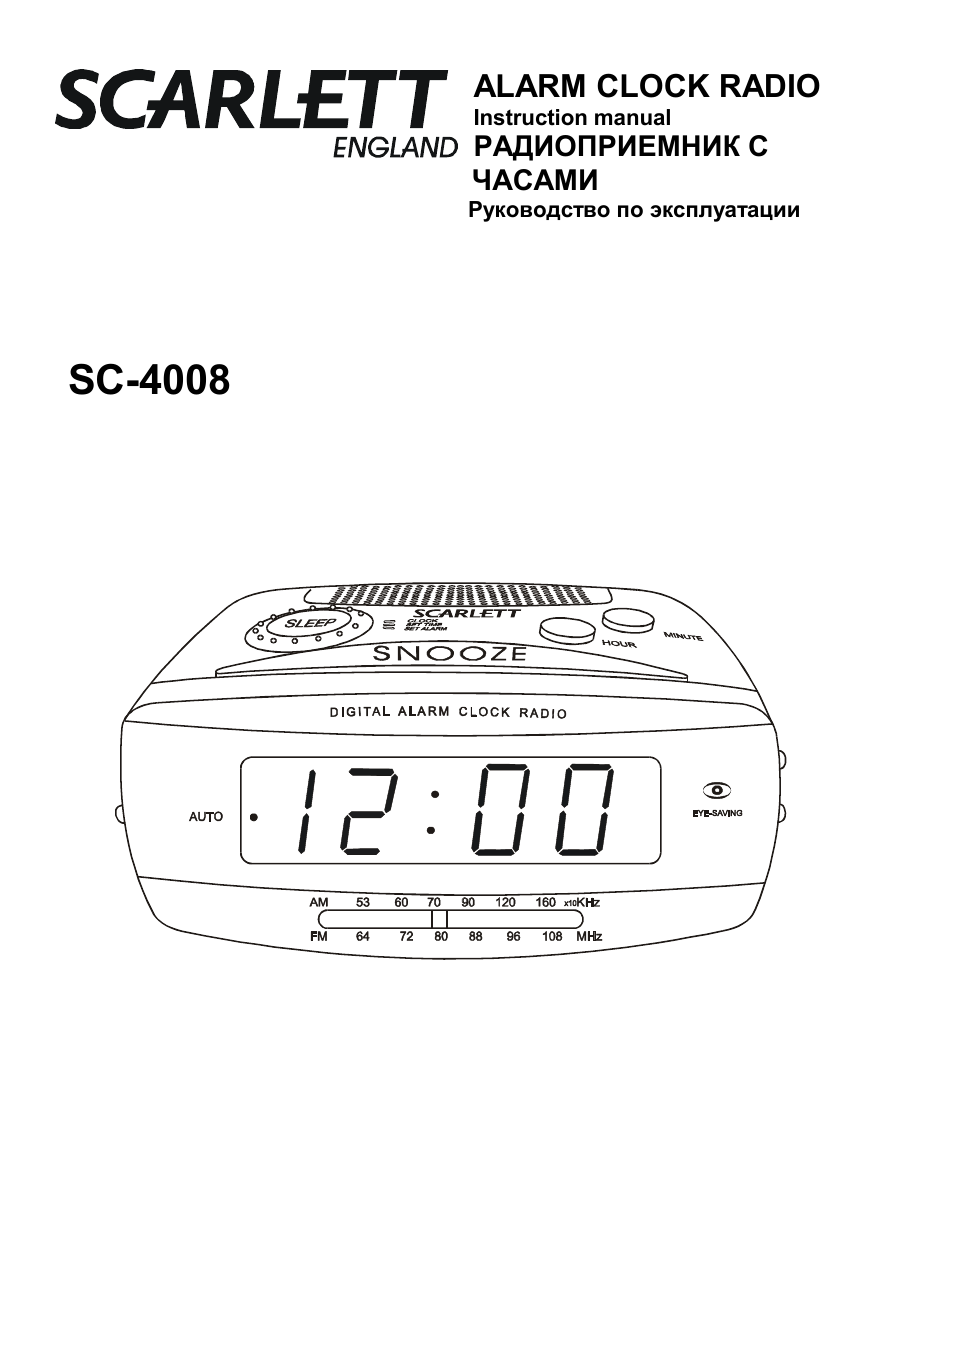 SC-4008